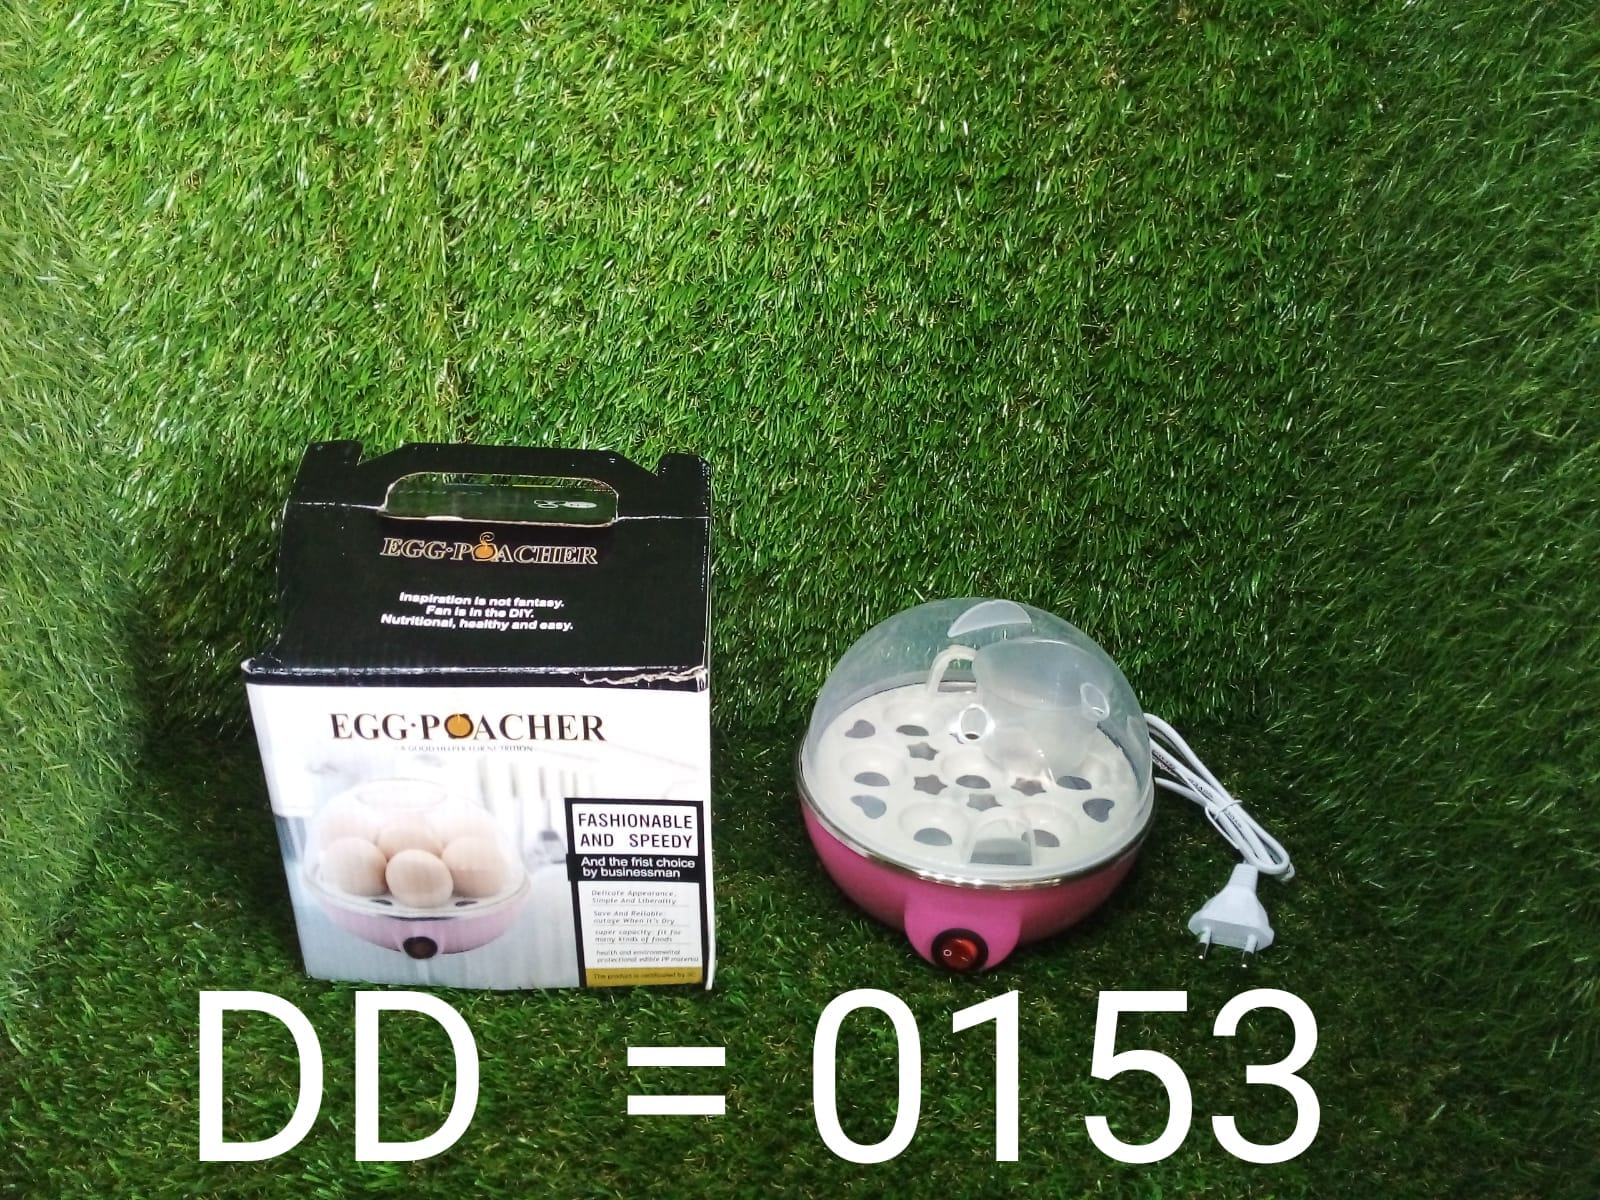 Egg Boiler / Poacher / Cooker / Electric Steamer (1 Layer, 2 Layer, 3 Layer)